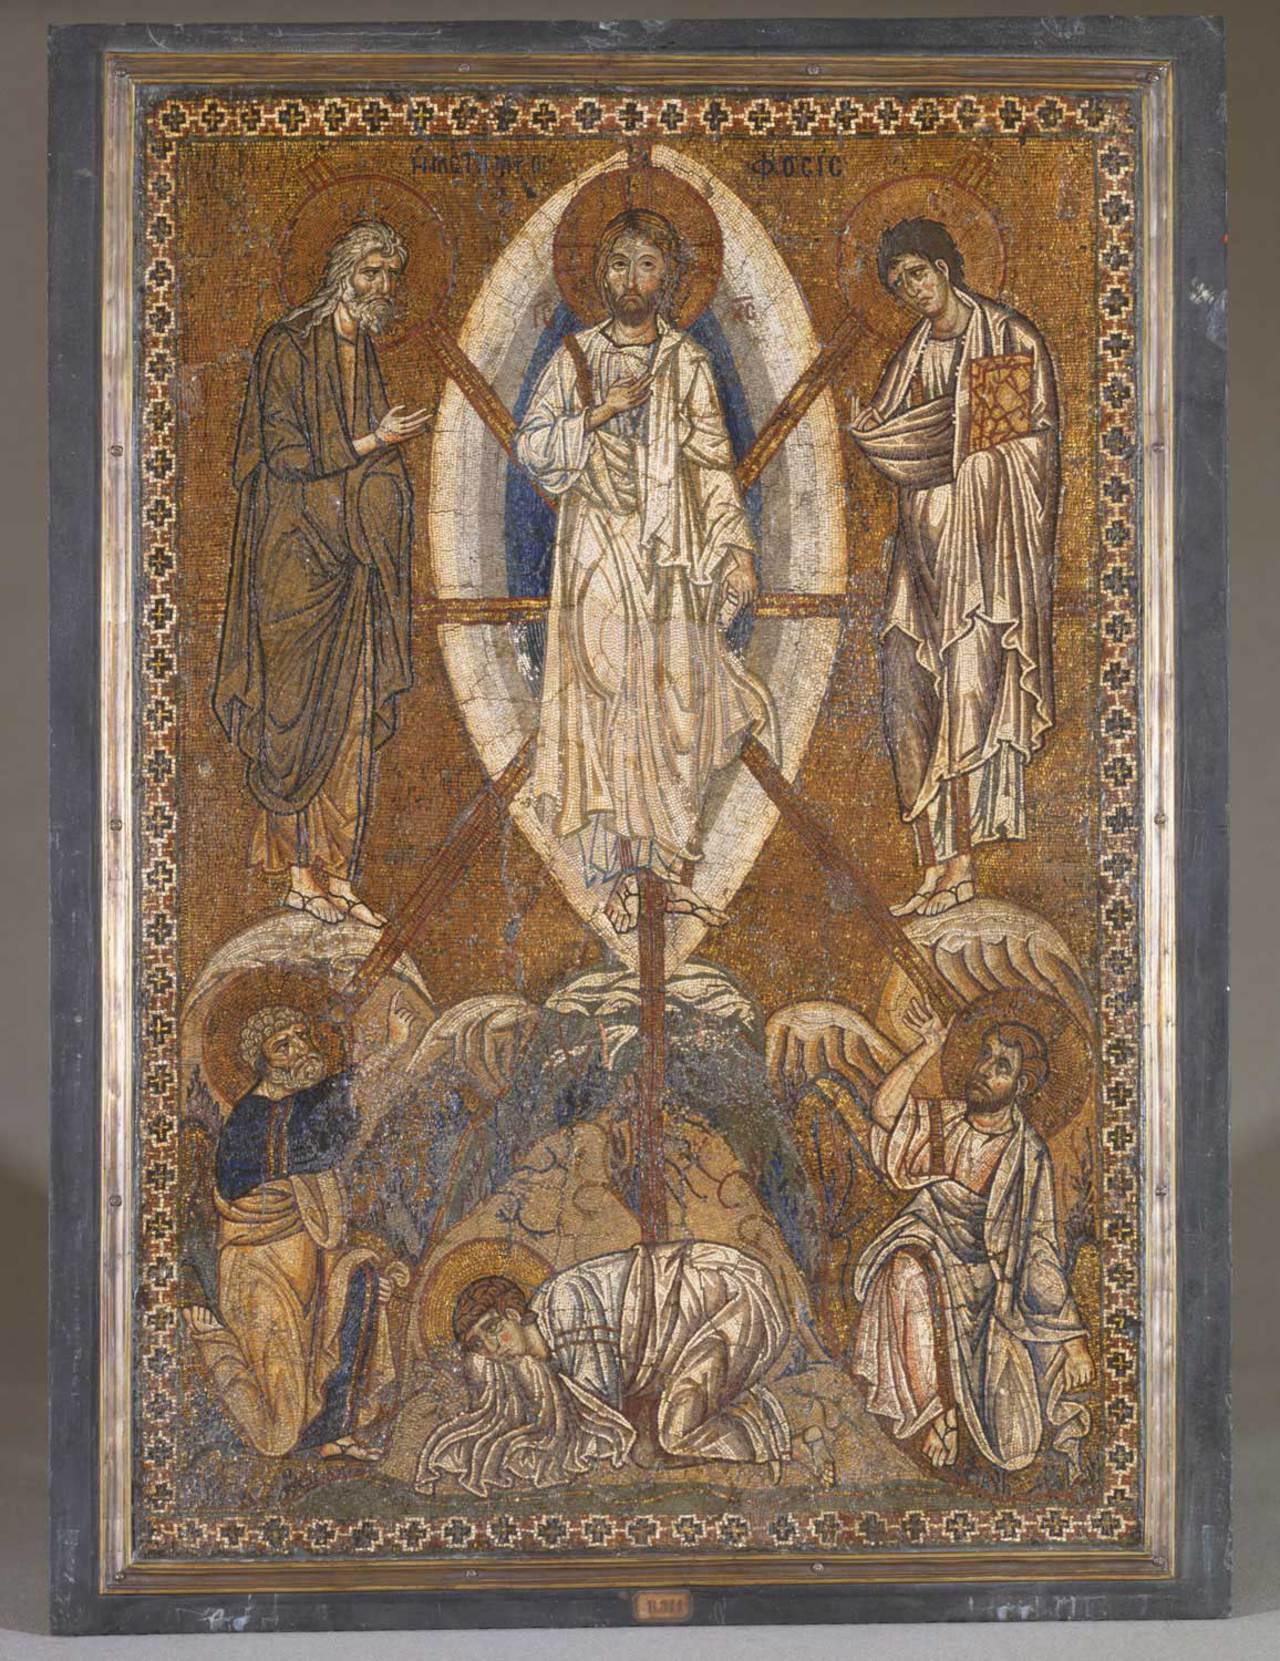 Îcone portative : la Transfiguration du Christ